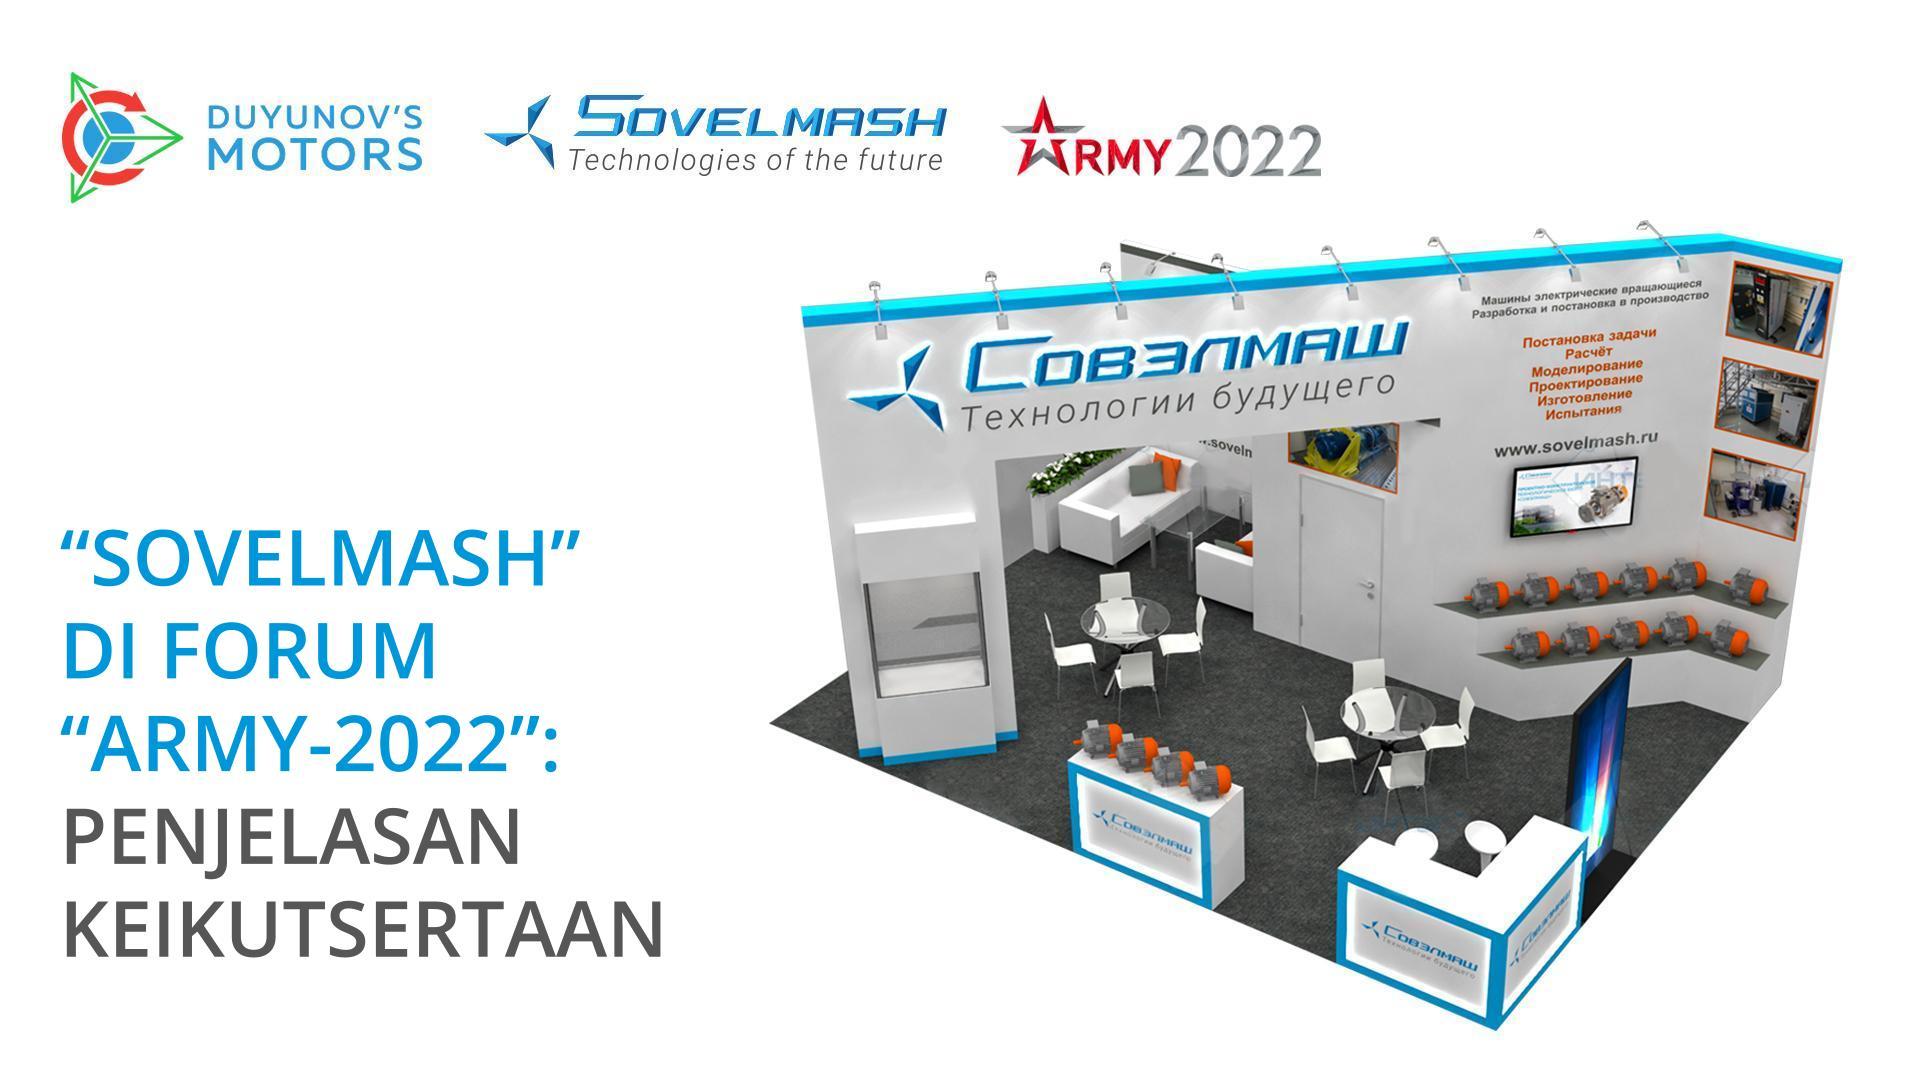 "Sovelmash" di forum "Army-2022": penjelasan keikutsertaan